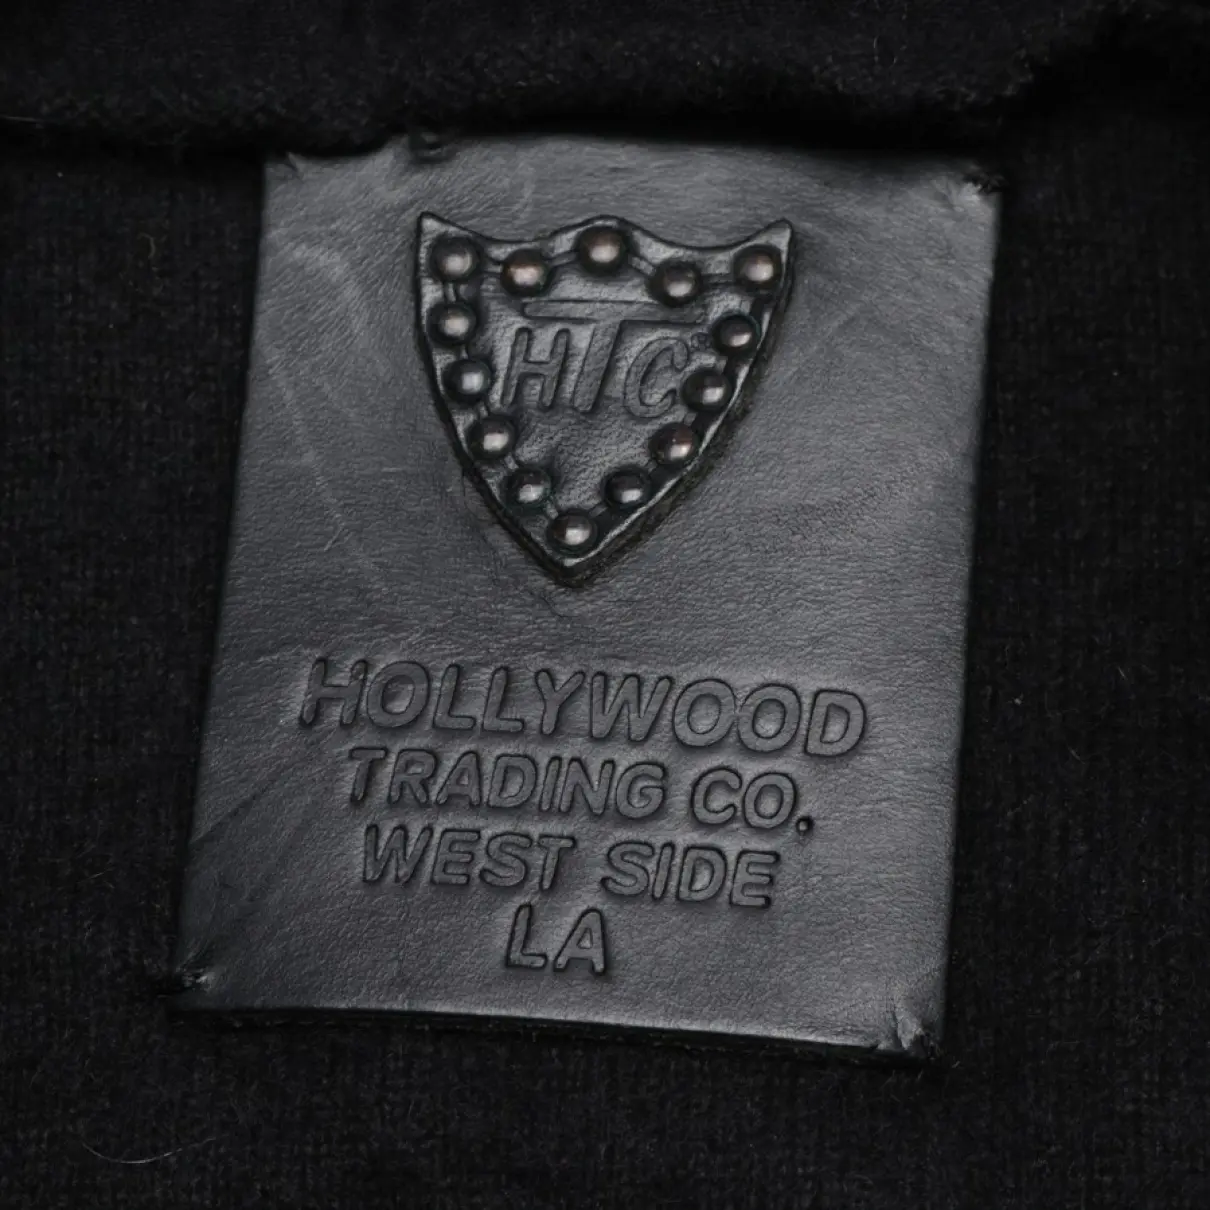 Buy Htc Leather jacket online